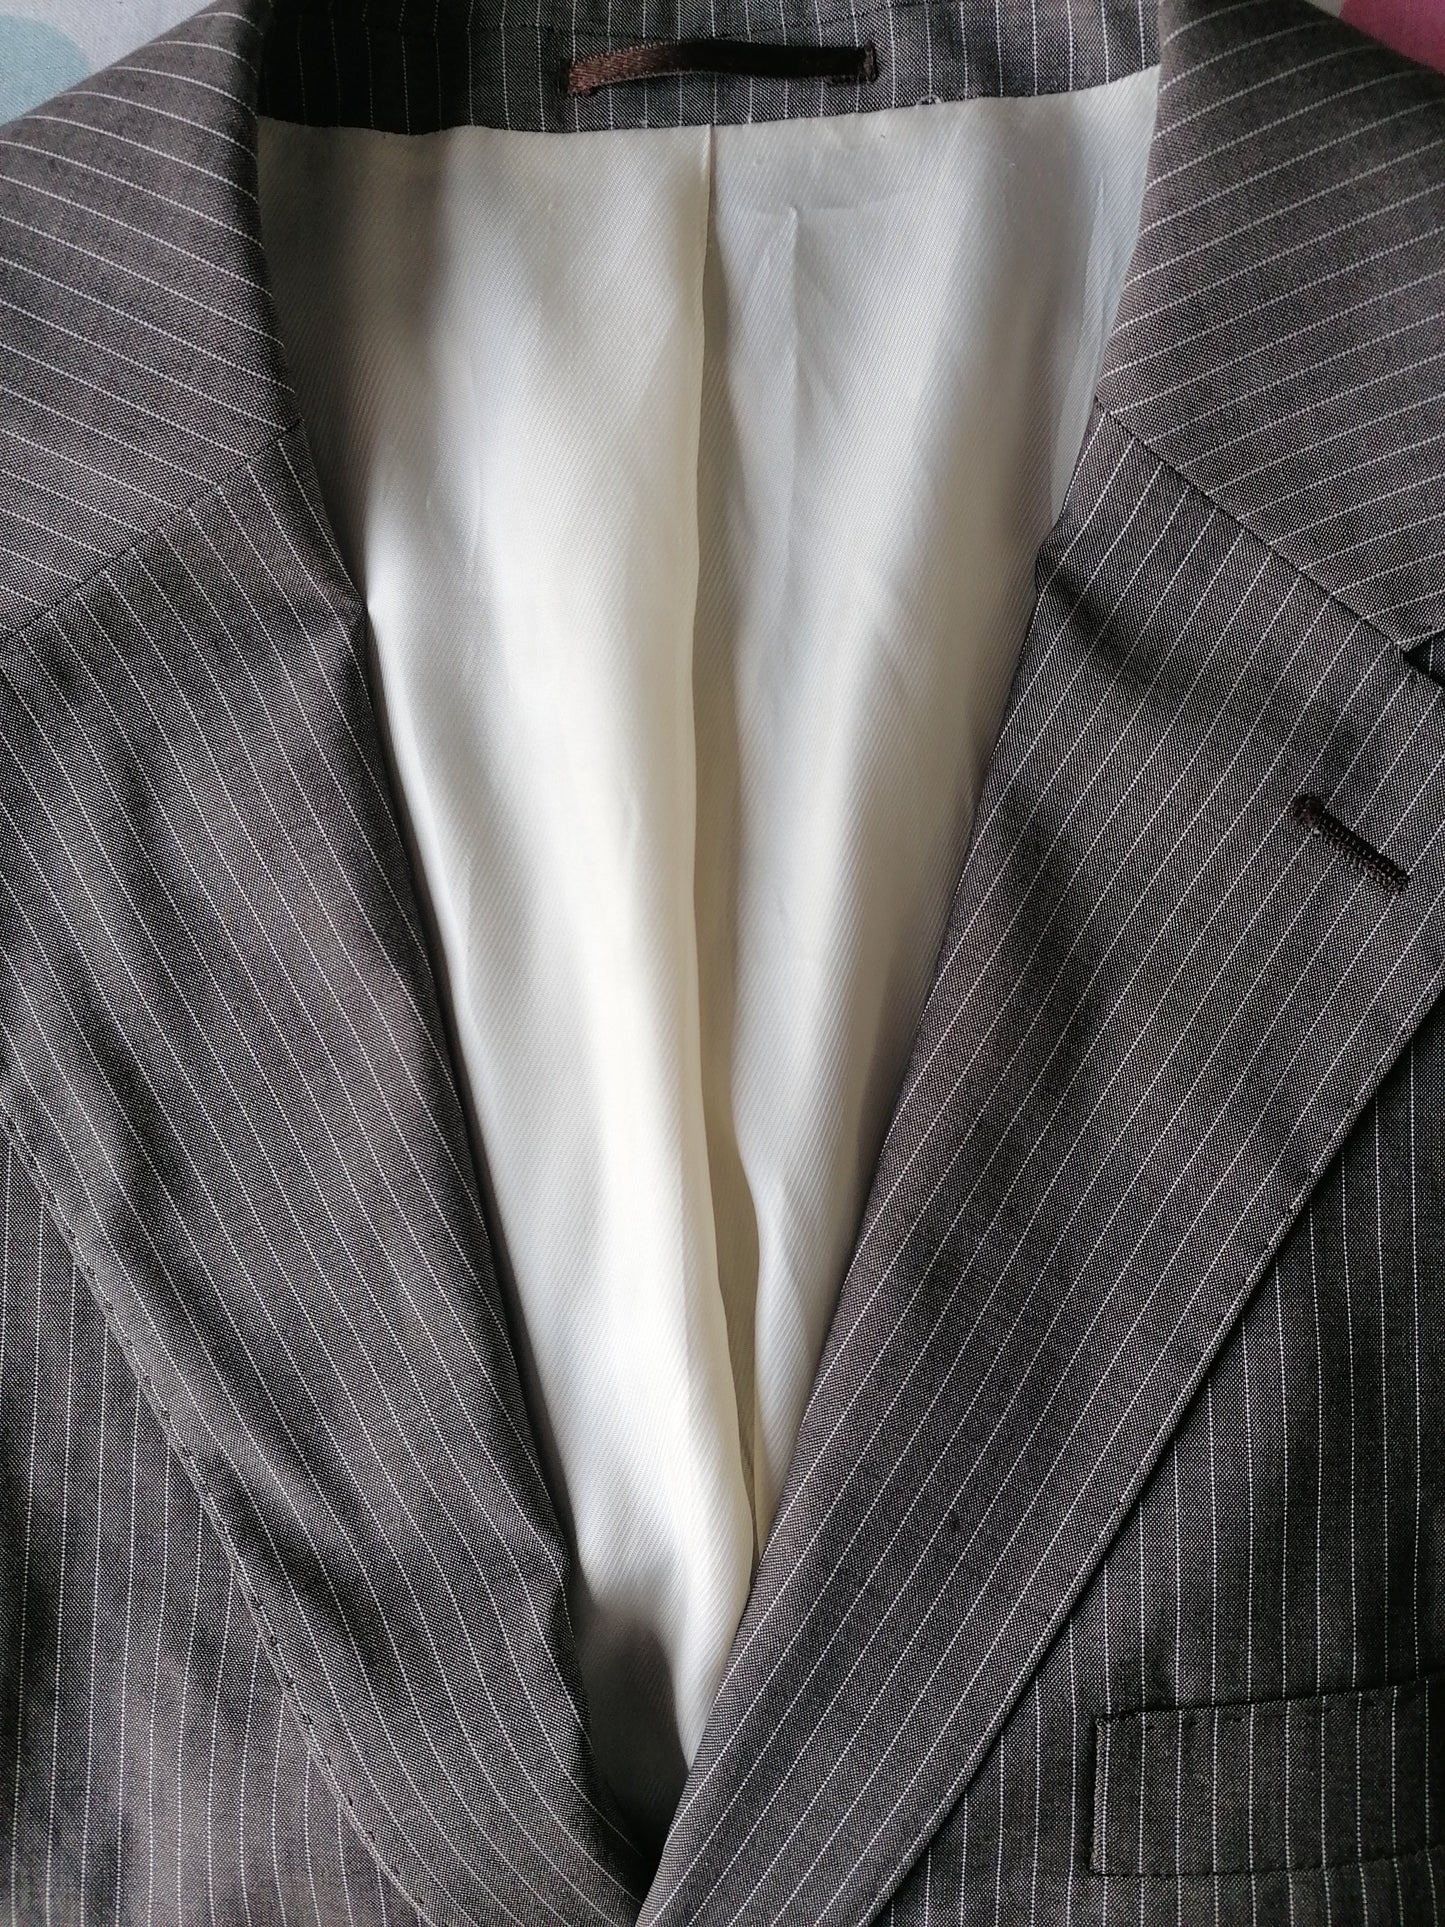 Luigi jacket. Brown white striped. Size 56 / XL. Regular fit. Super 100's